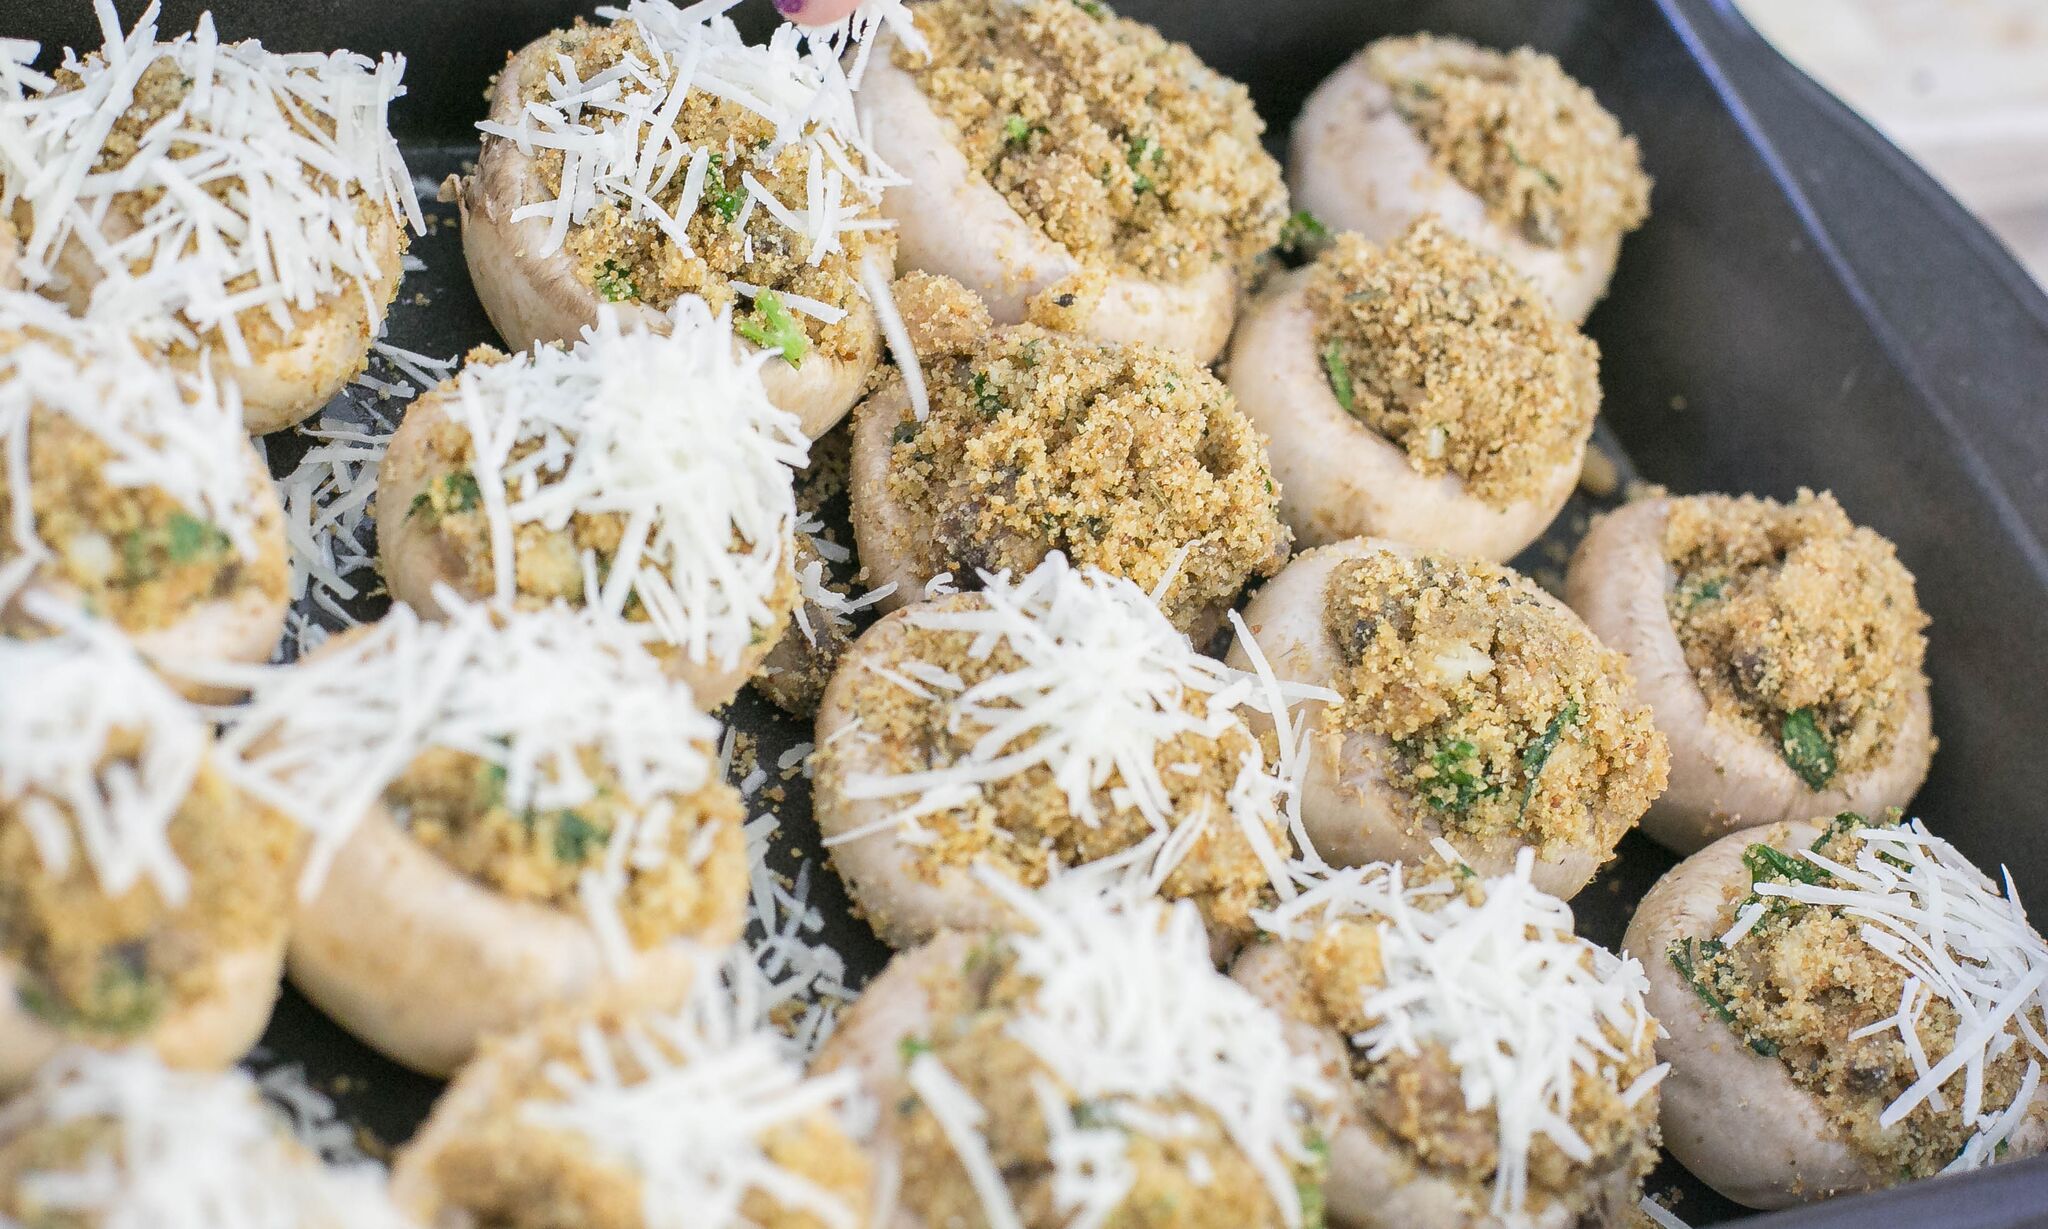 Sprinkle shredded parmesan cheese over stuffed mushrooms before baking. 